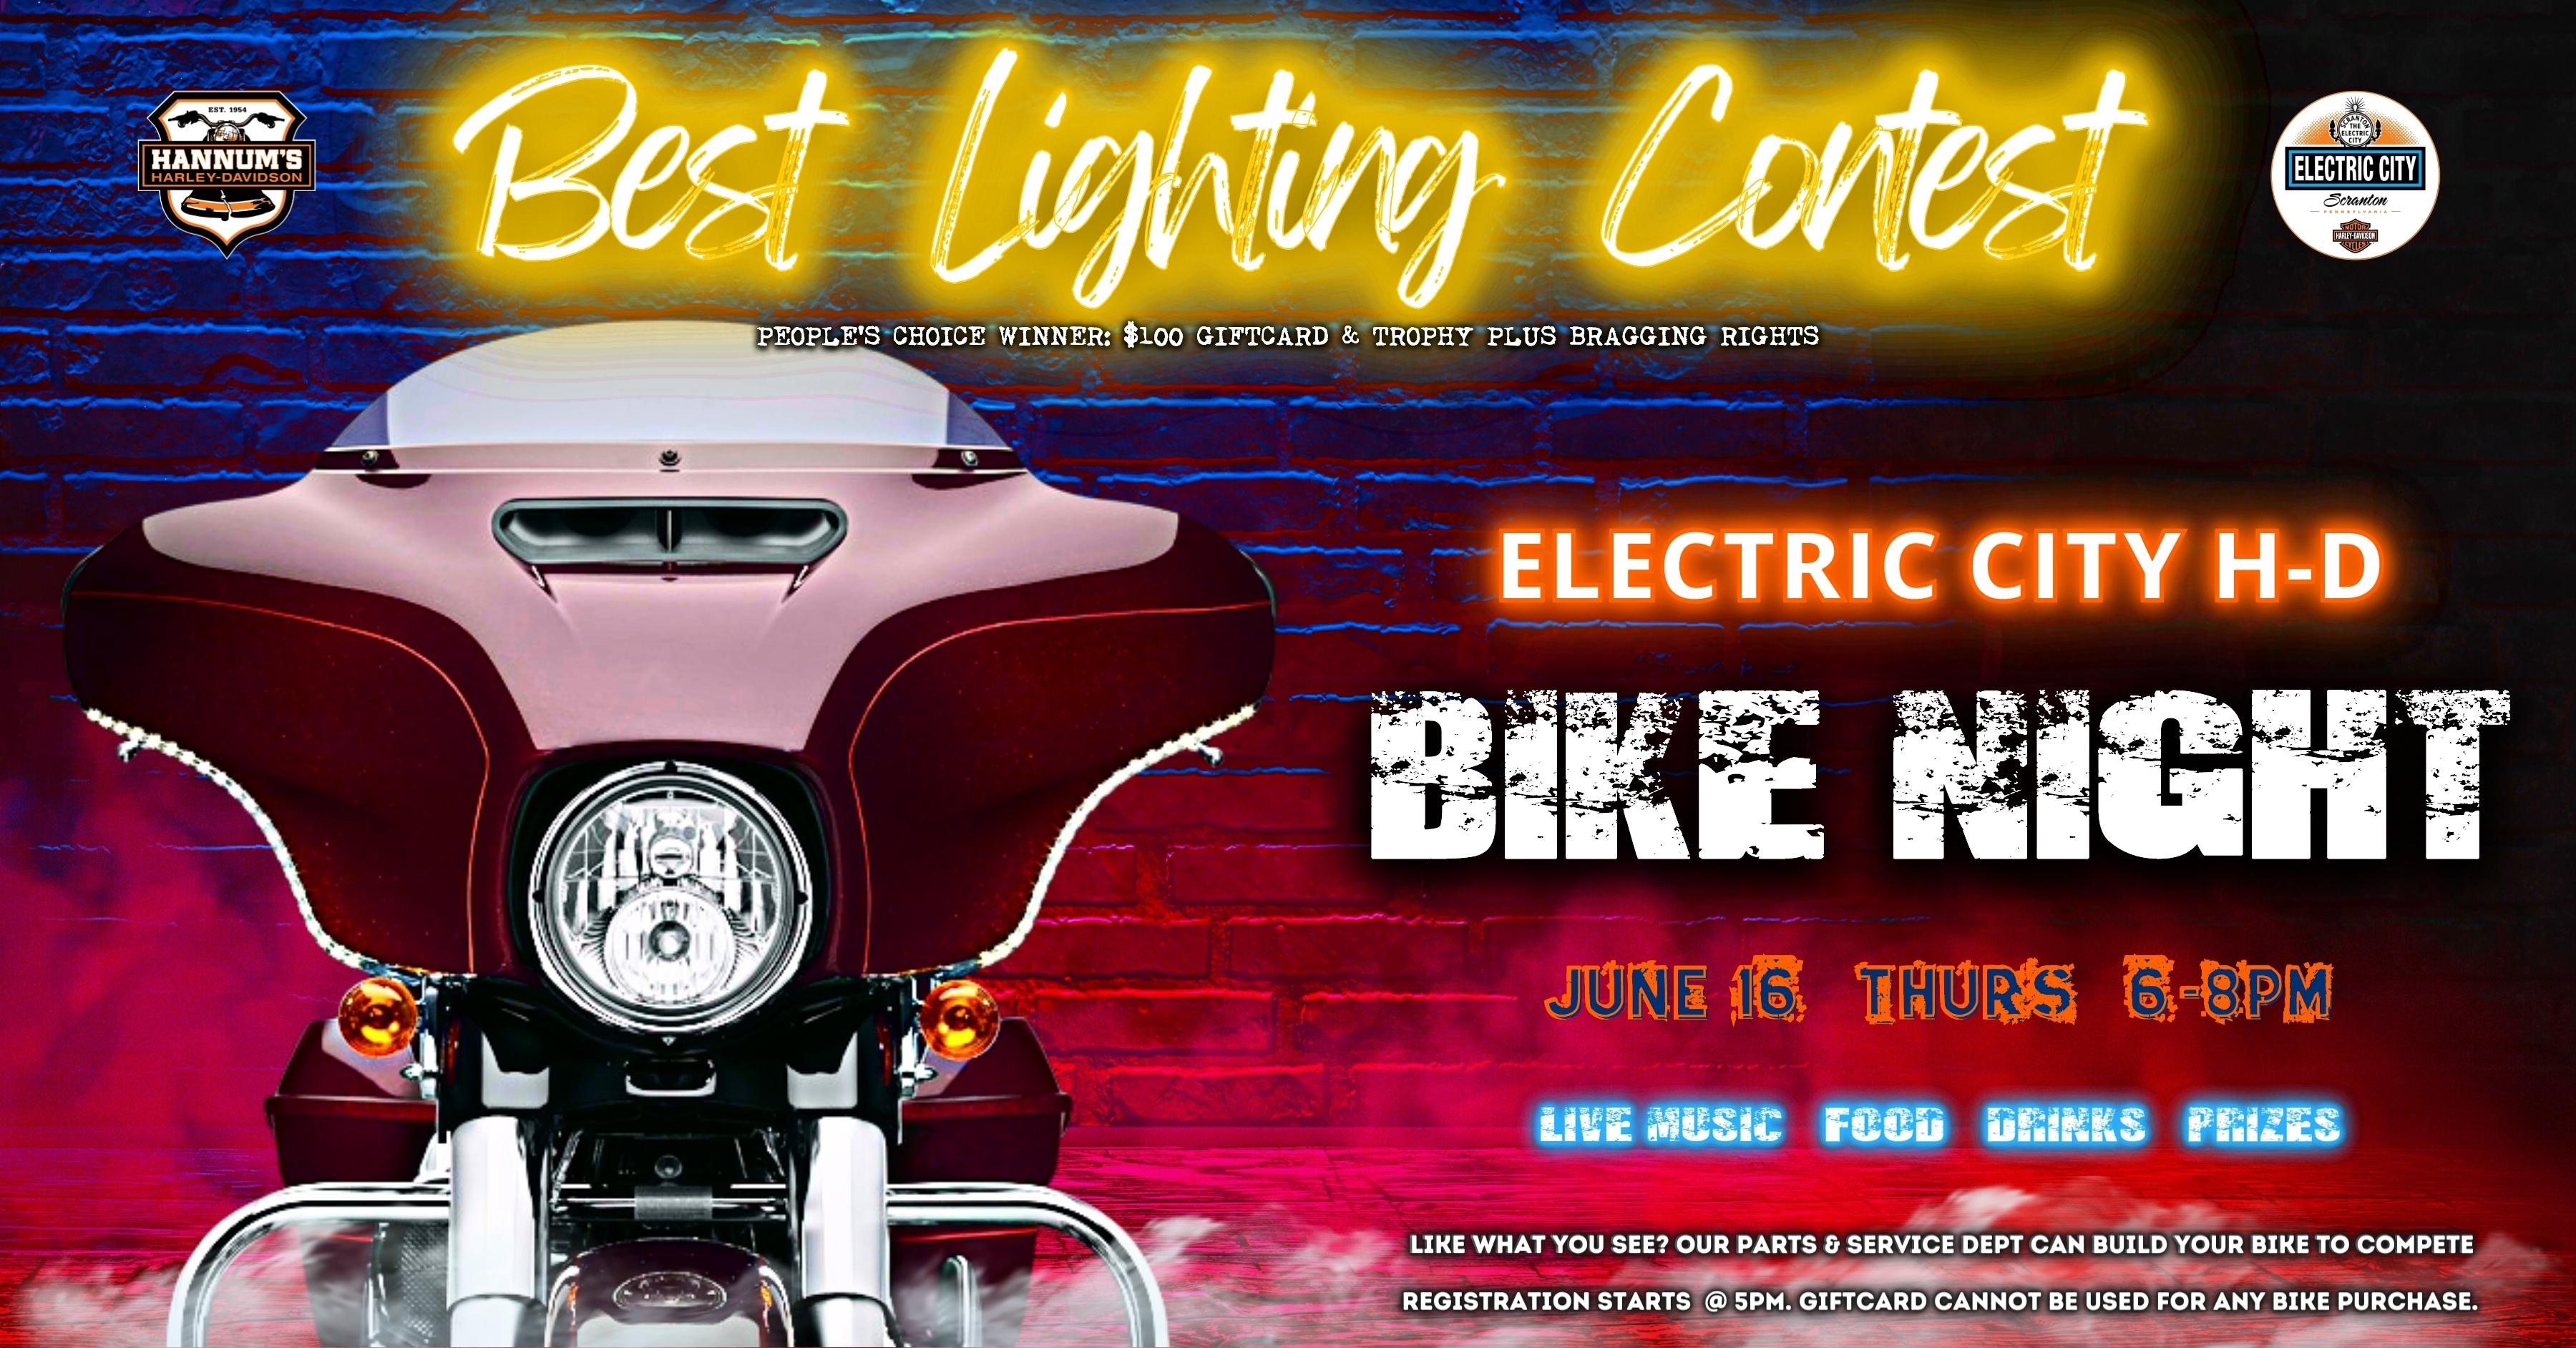 ECHD BIKE NIGHT BEST LIGHTING CONTEST Born To Ride Motorcycle